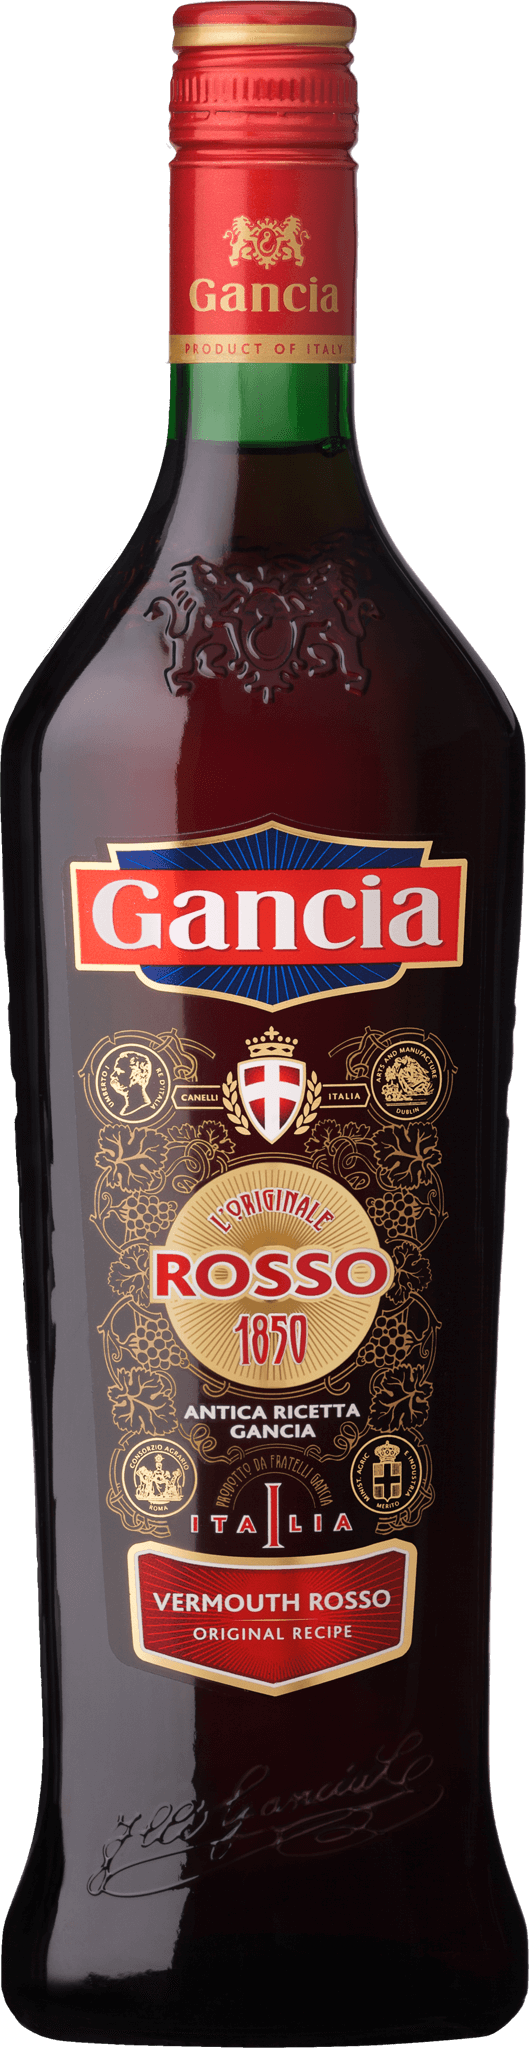 Gancia Rosso Vermouth 16.0% Vol. 75cl